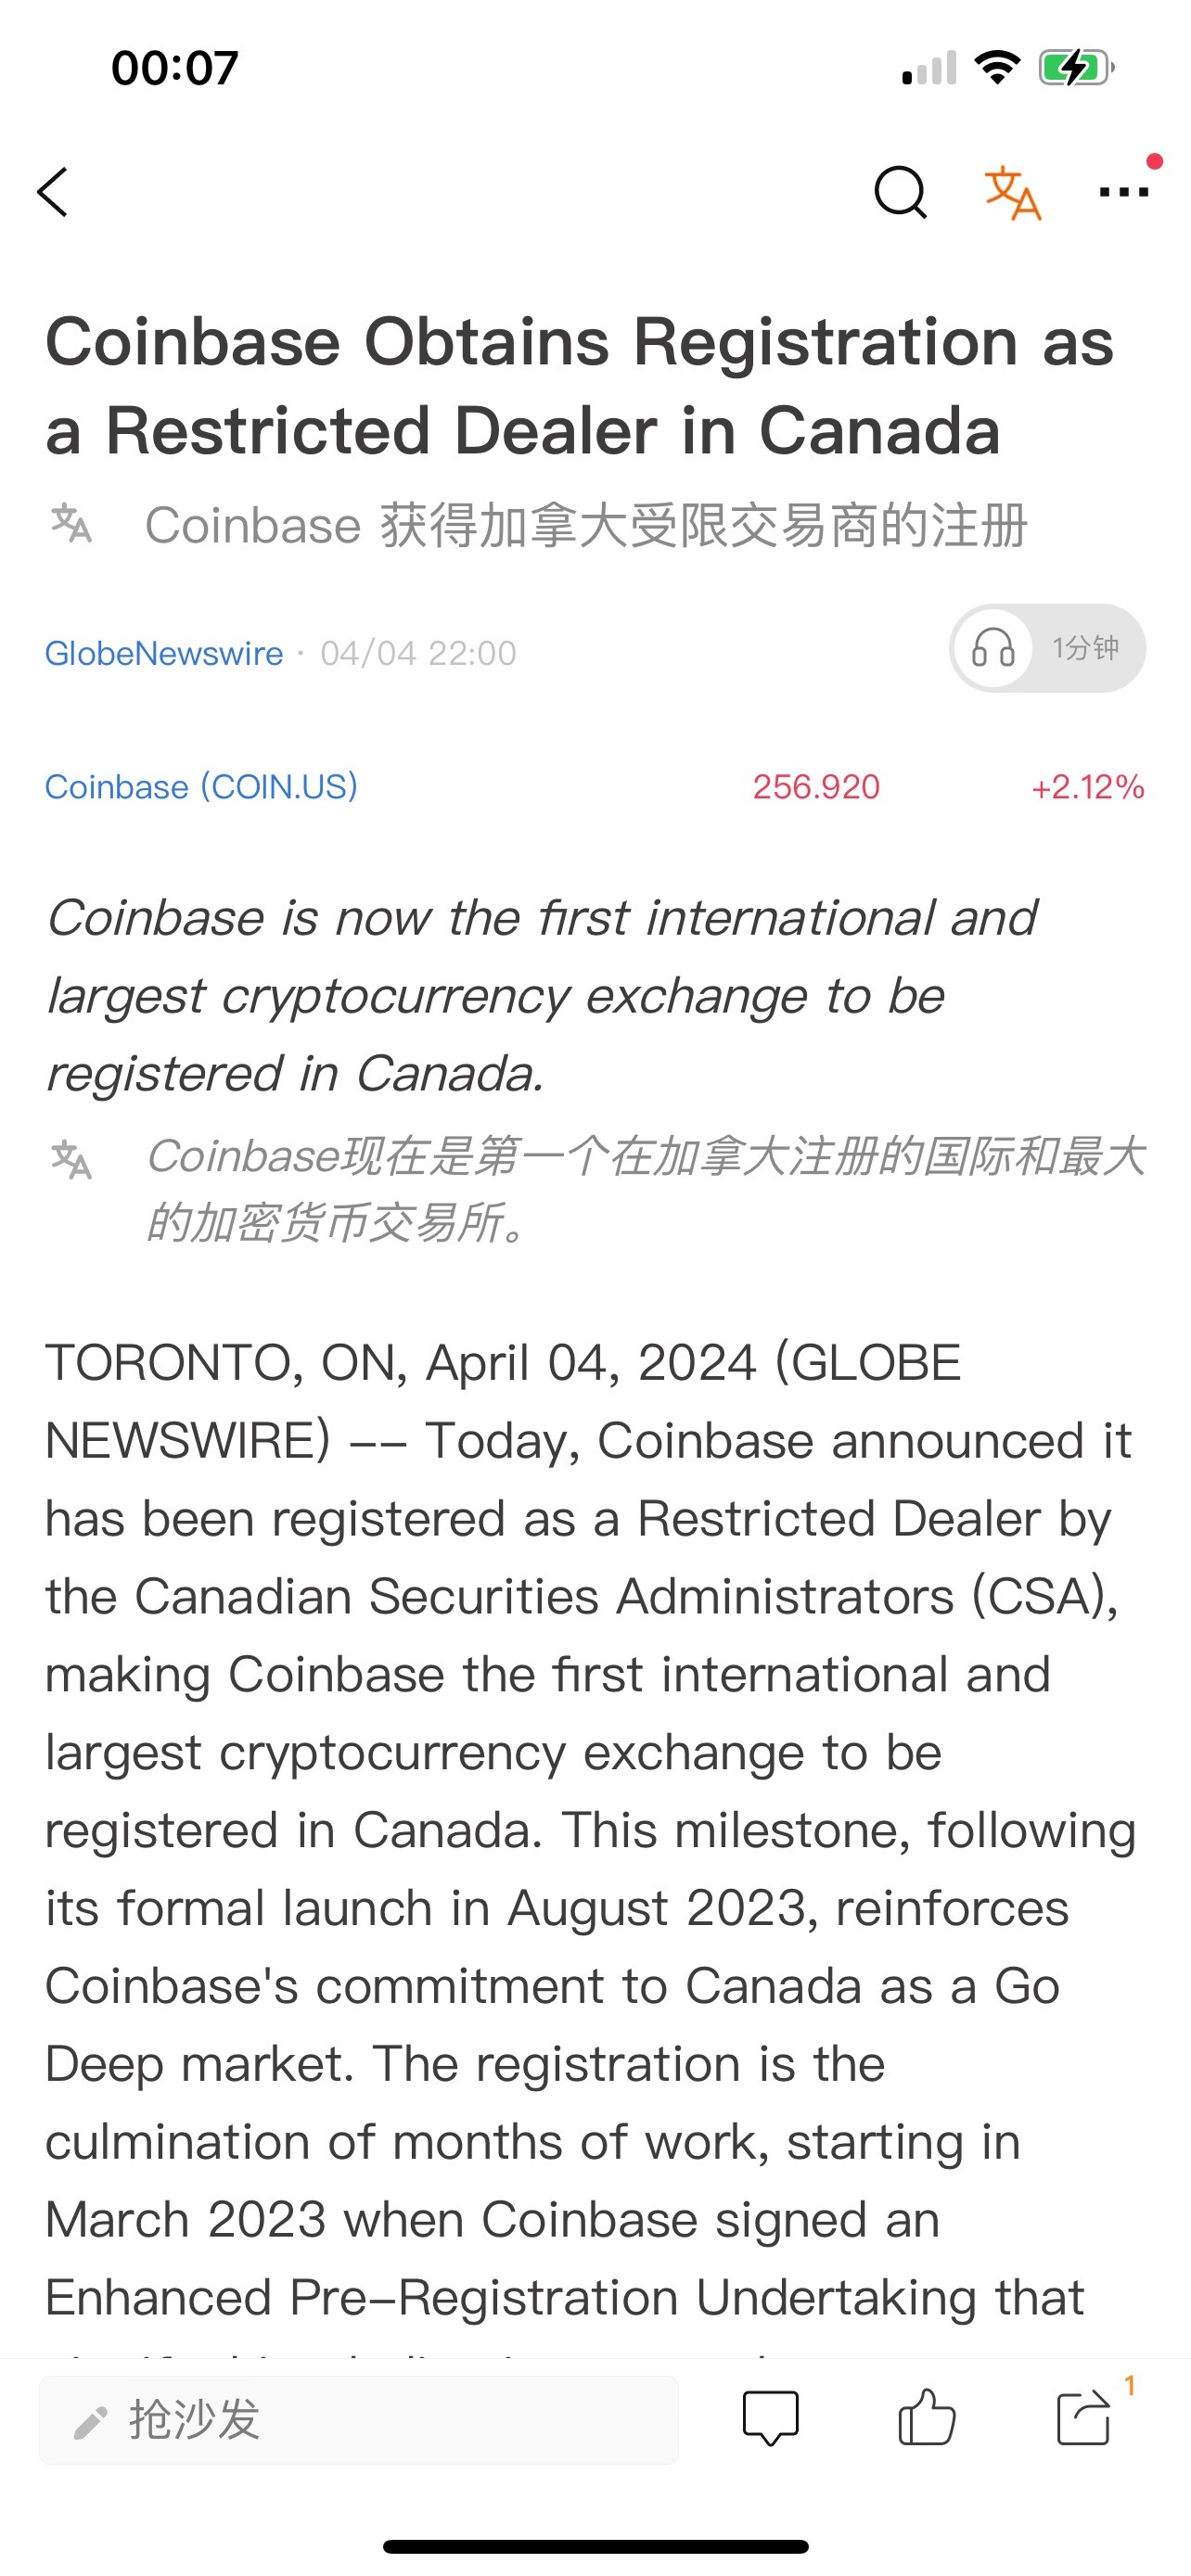 $Coinbase (COIN.US)$ 好消息啊！要🚀了[得意]